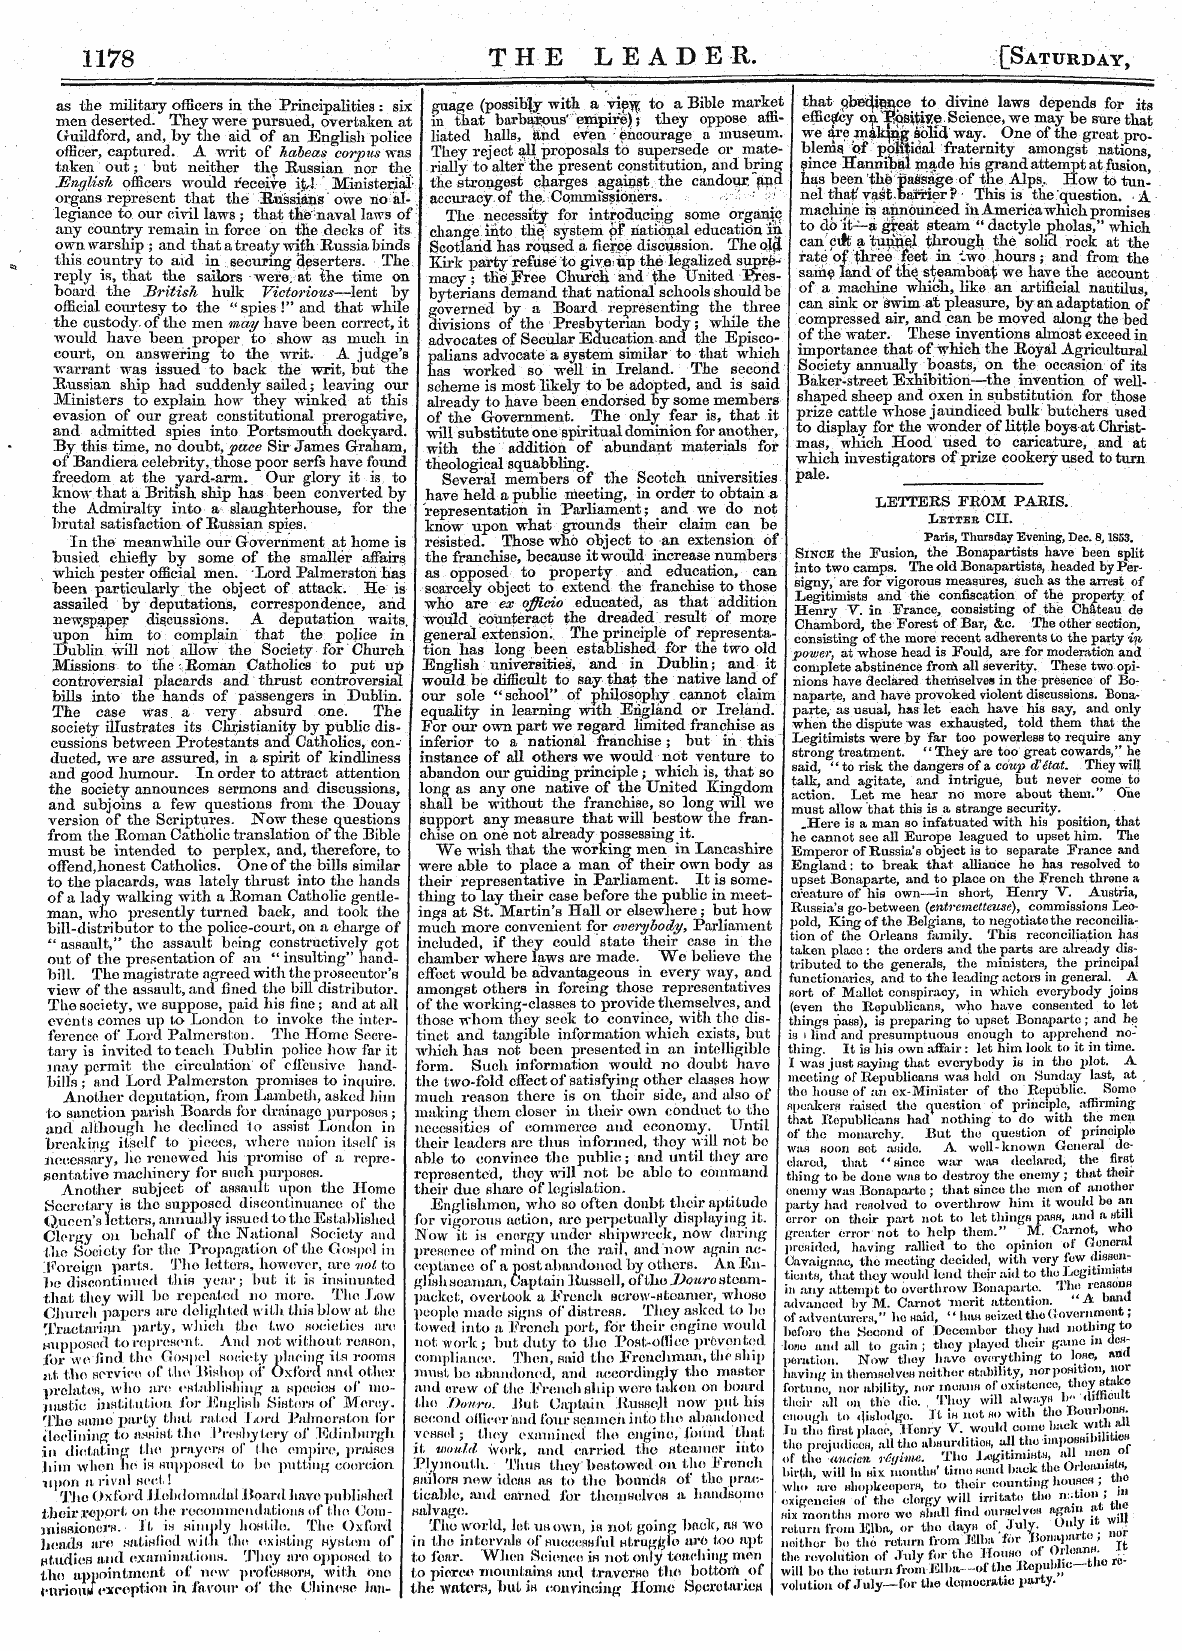 Leader (1850-1860): jS F Y, Country edition - 1178 The L Eadee. [Saturday,